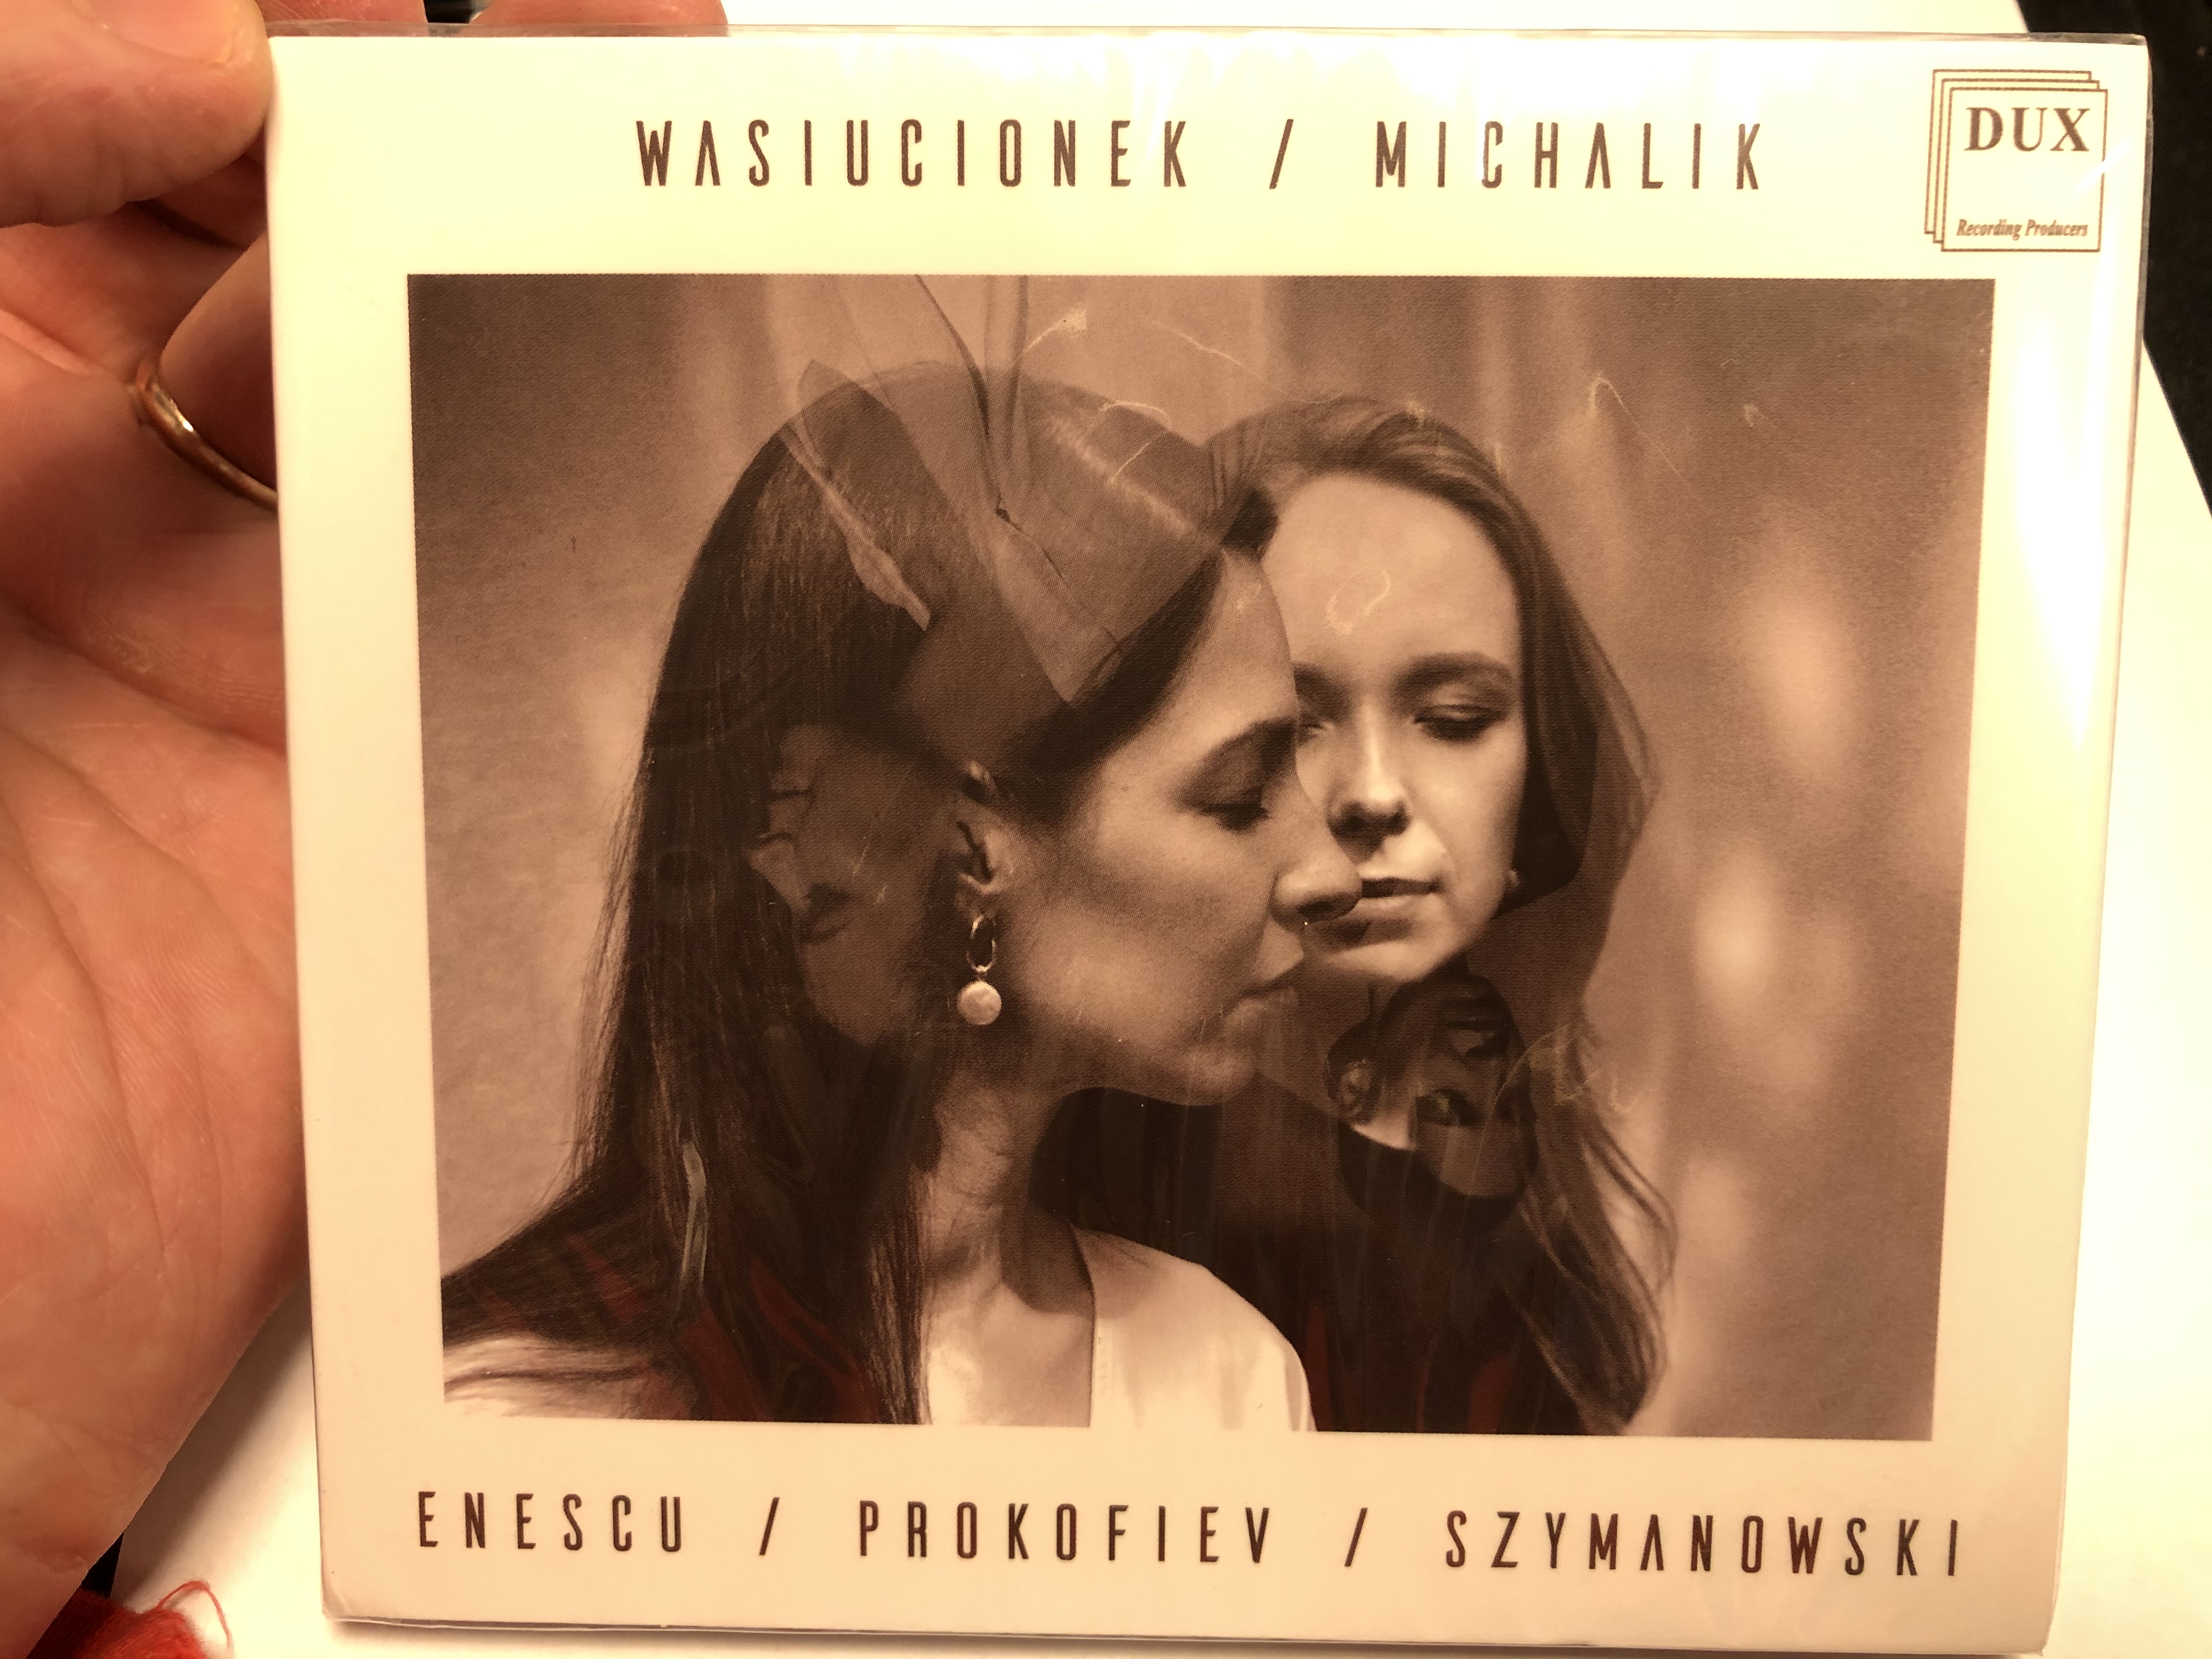 wasiucionek-michalik-enescu-prokofiev-szymanowski-dux-audio-cd-2020-dux-1629-1-.jpg